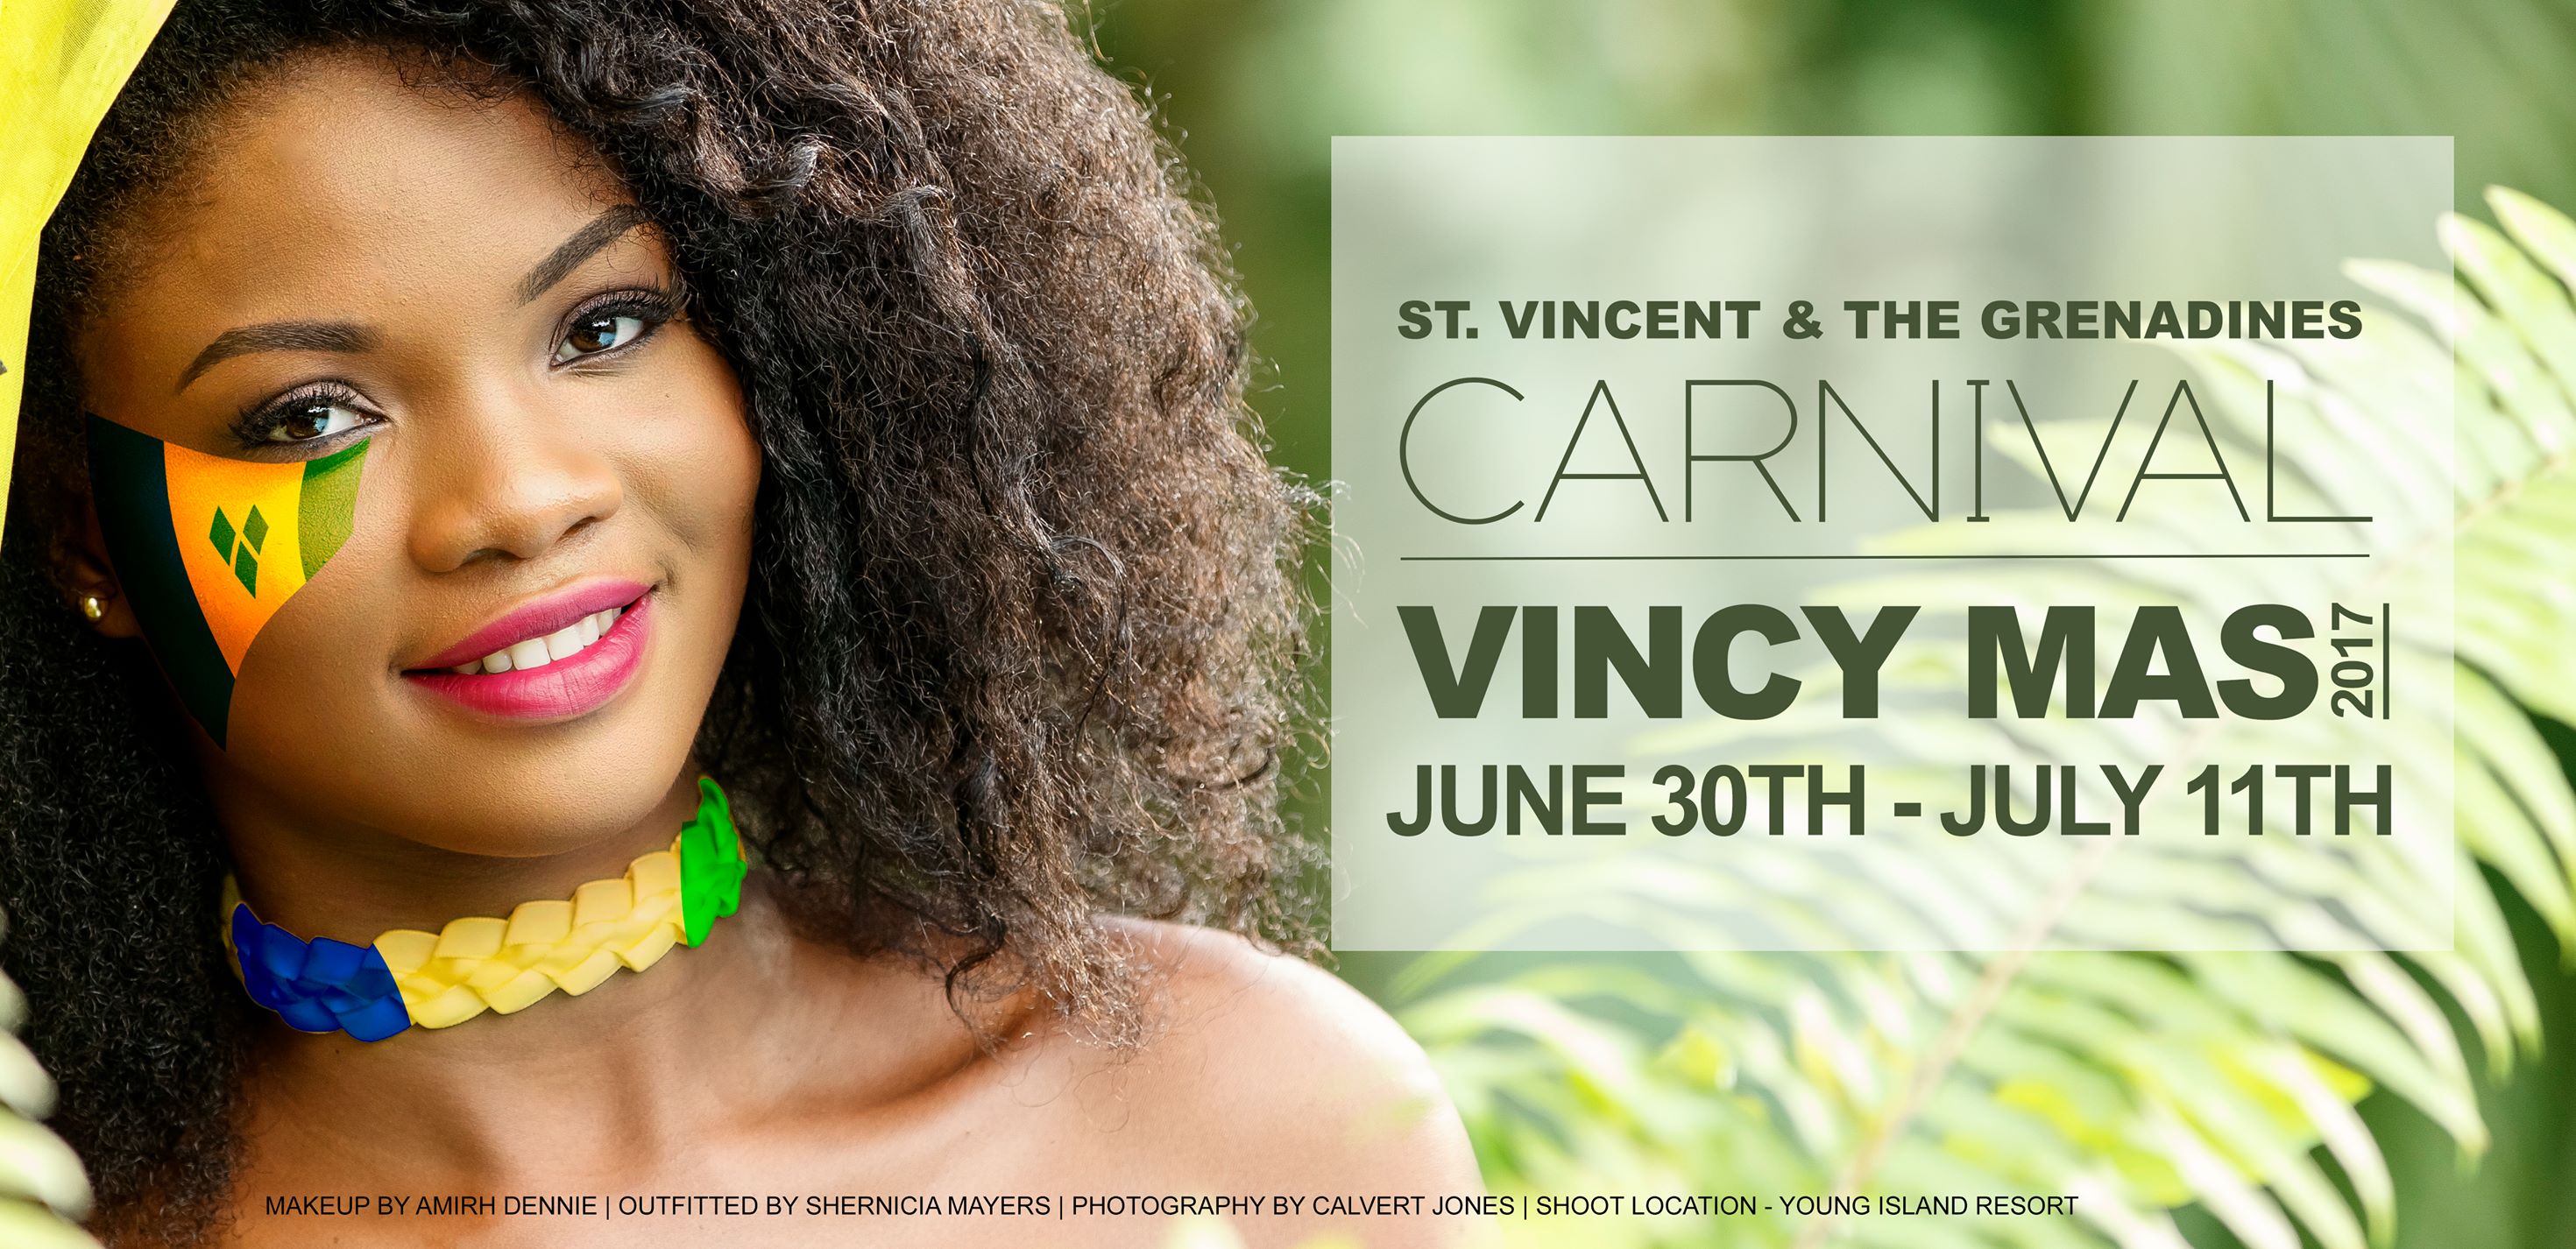 Vincy Mas flyer Red Carpet Shelley Caribbean Entertainment News